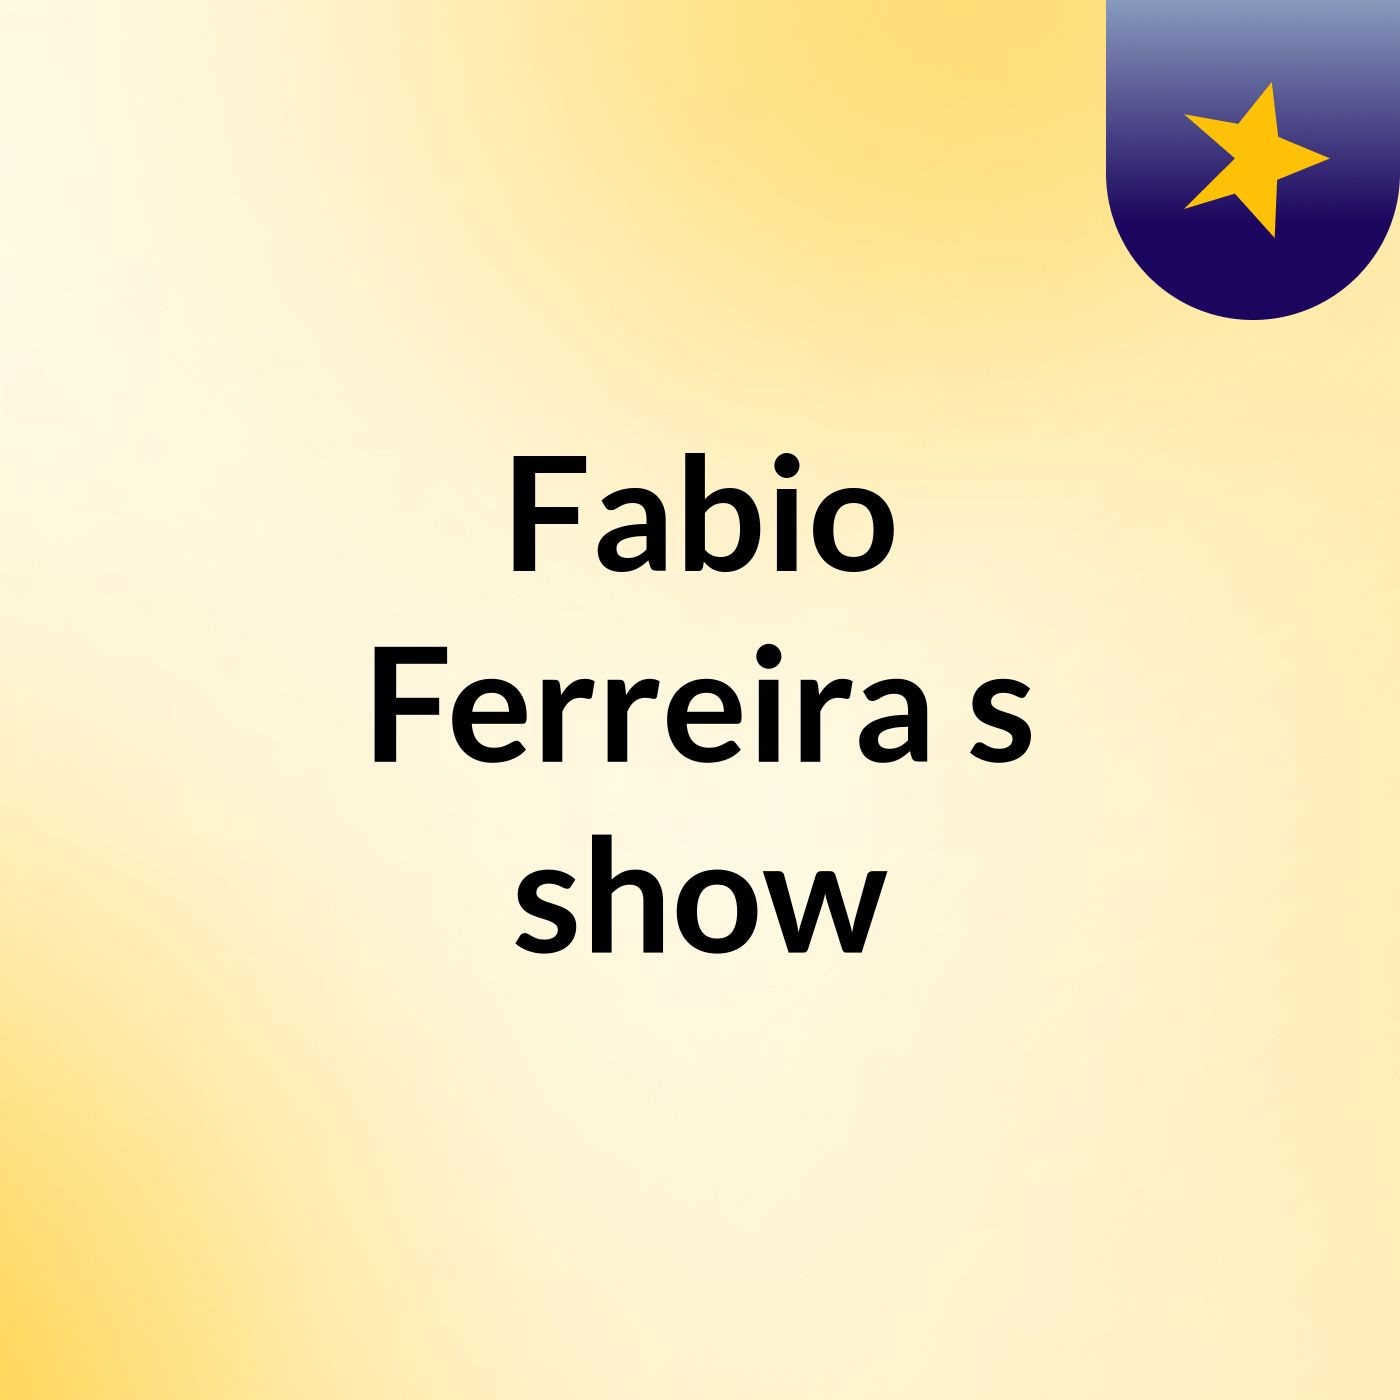 Fabio Ferreira's show